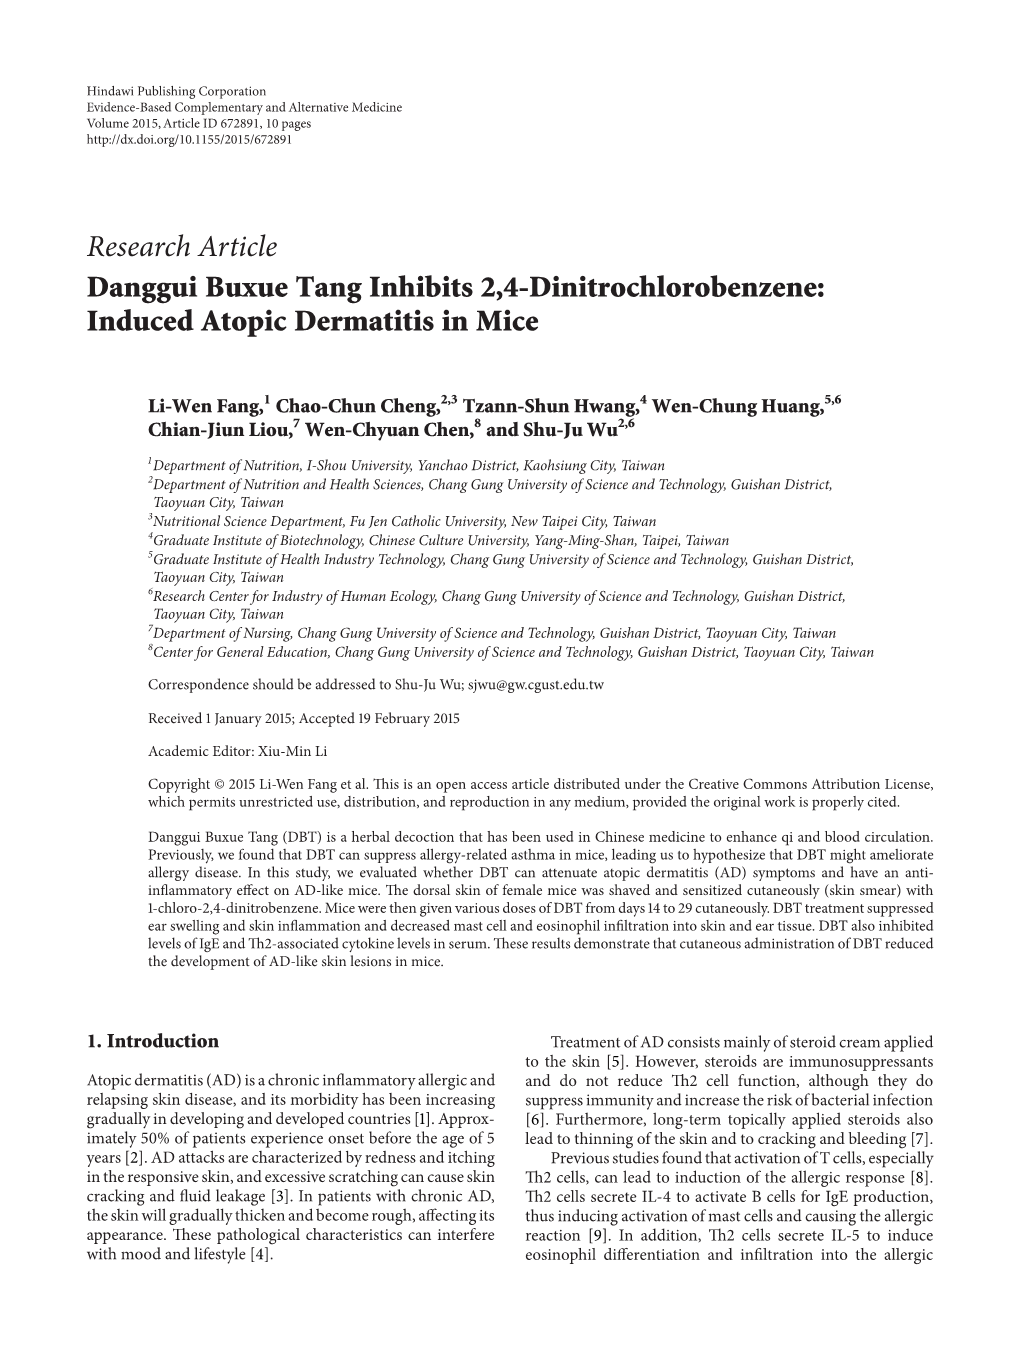 Danggui Buxue Tang Inhibits 2, 4-Dinitrochlorobenzene: Induced